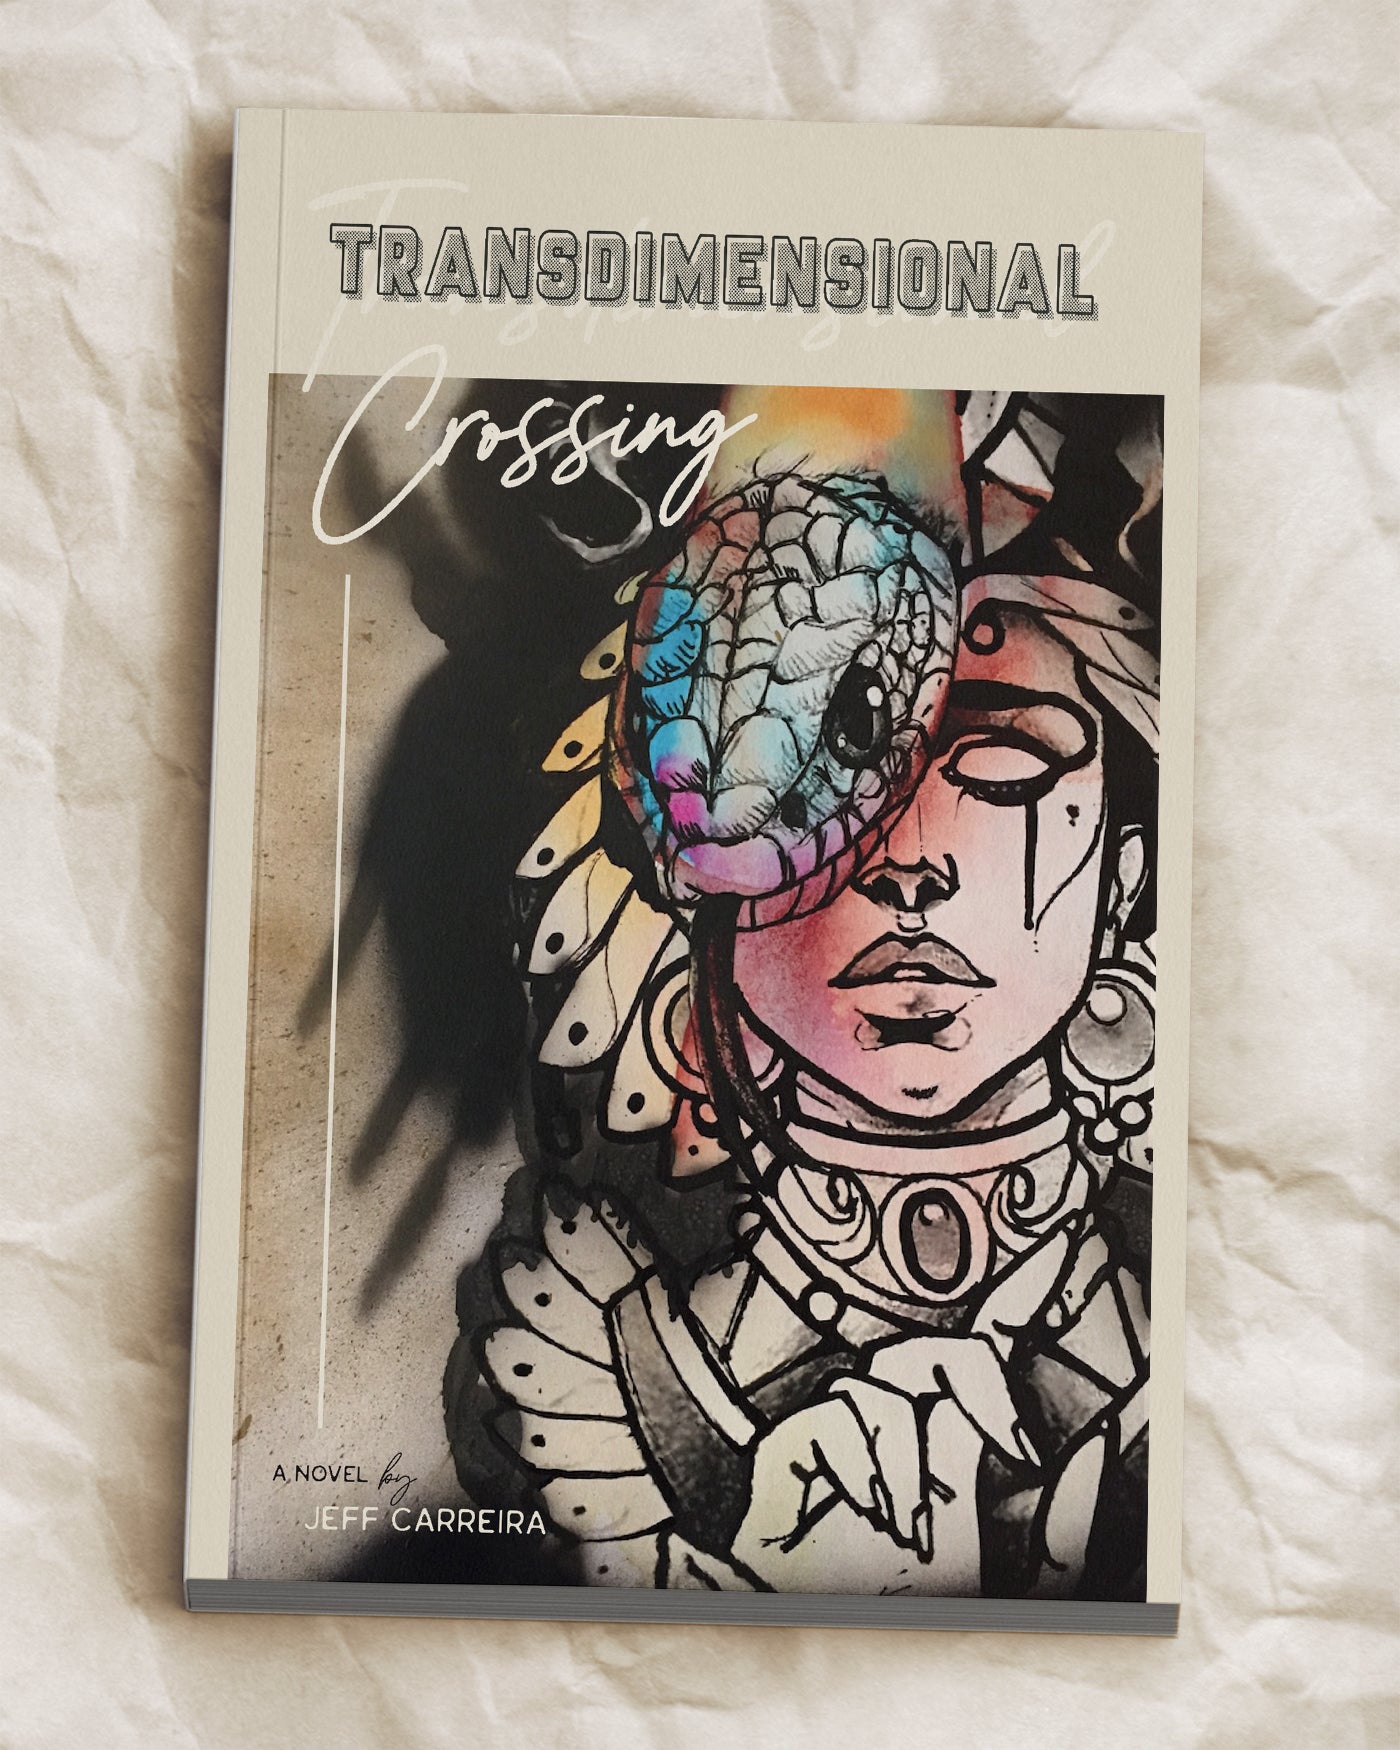 Transdimensional Crossing: A Novel